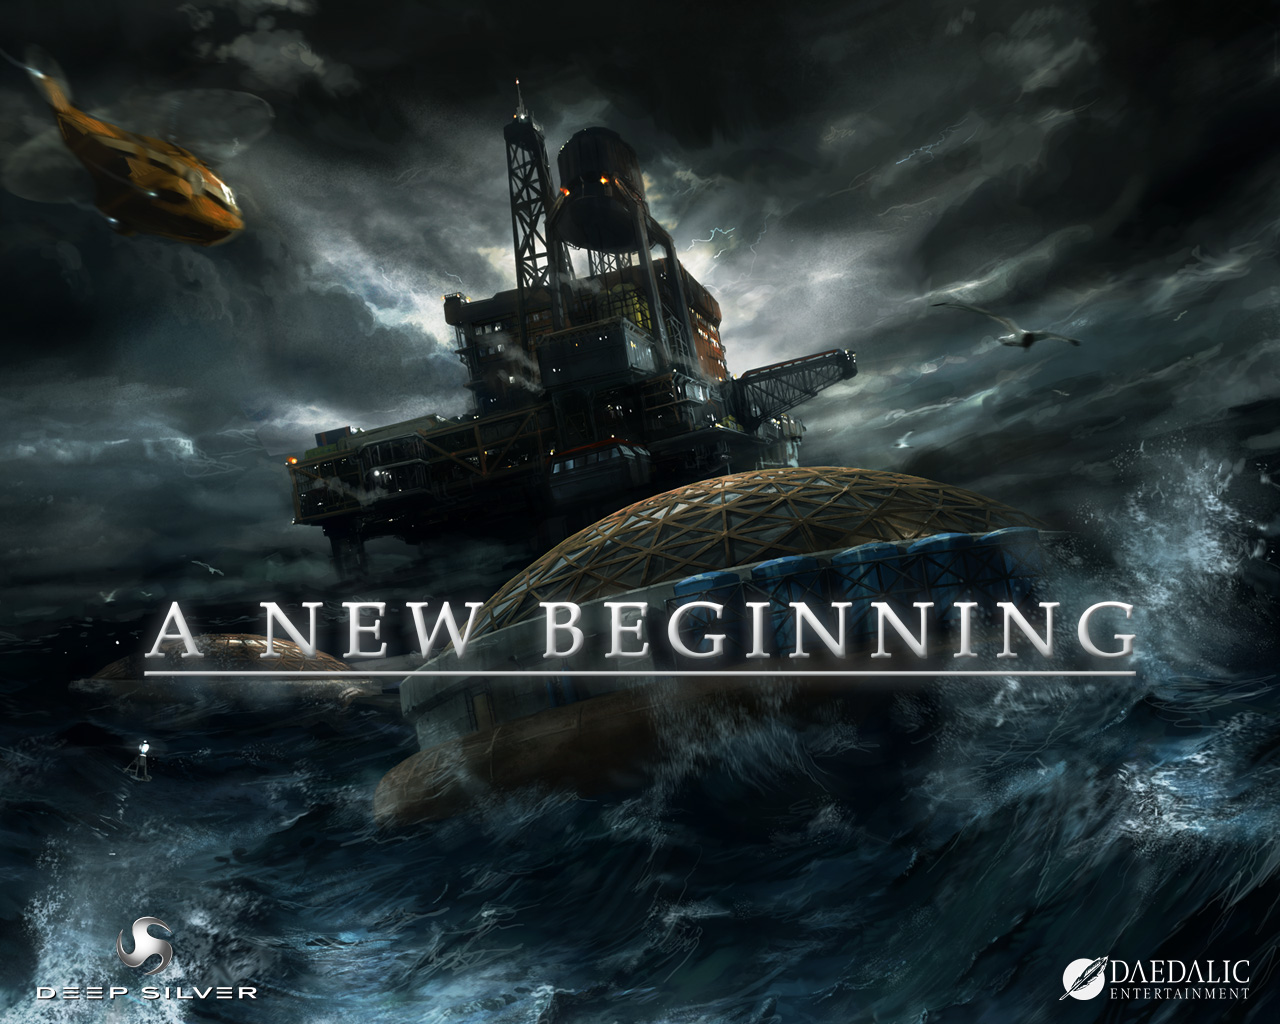 My new begun. A New beginning. Картинка для начала игры. Начало обои. A New beginning (новое начало) картинка.